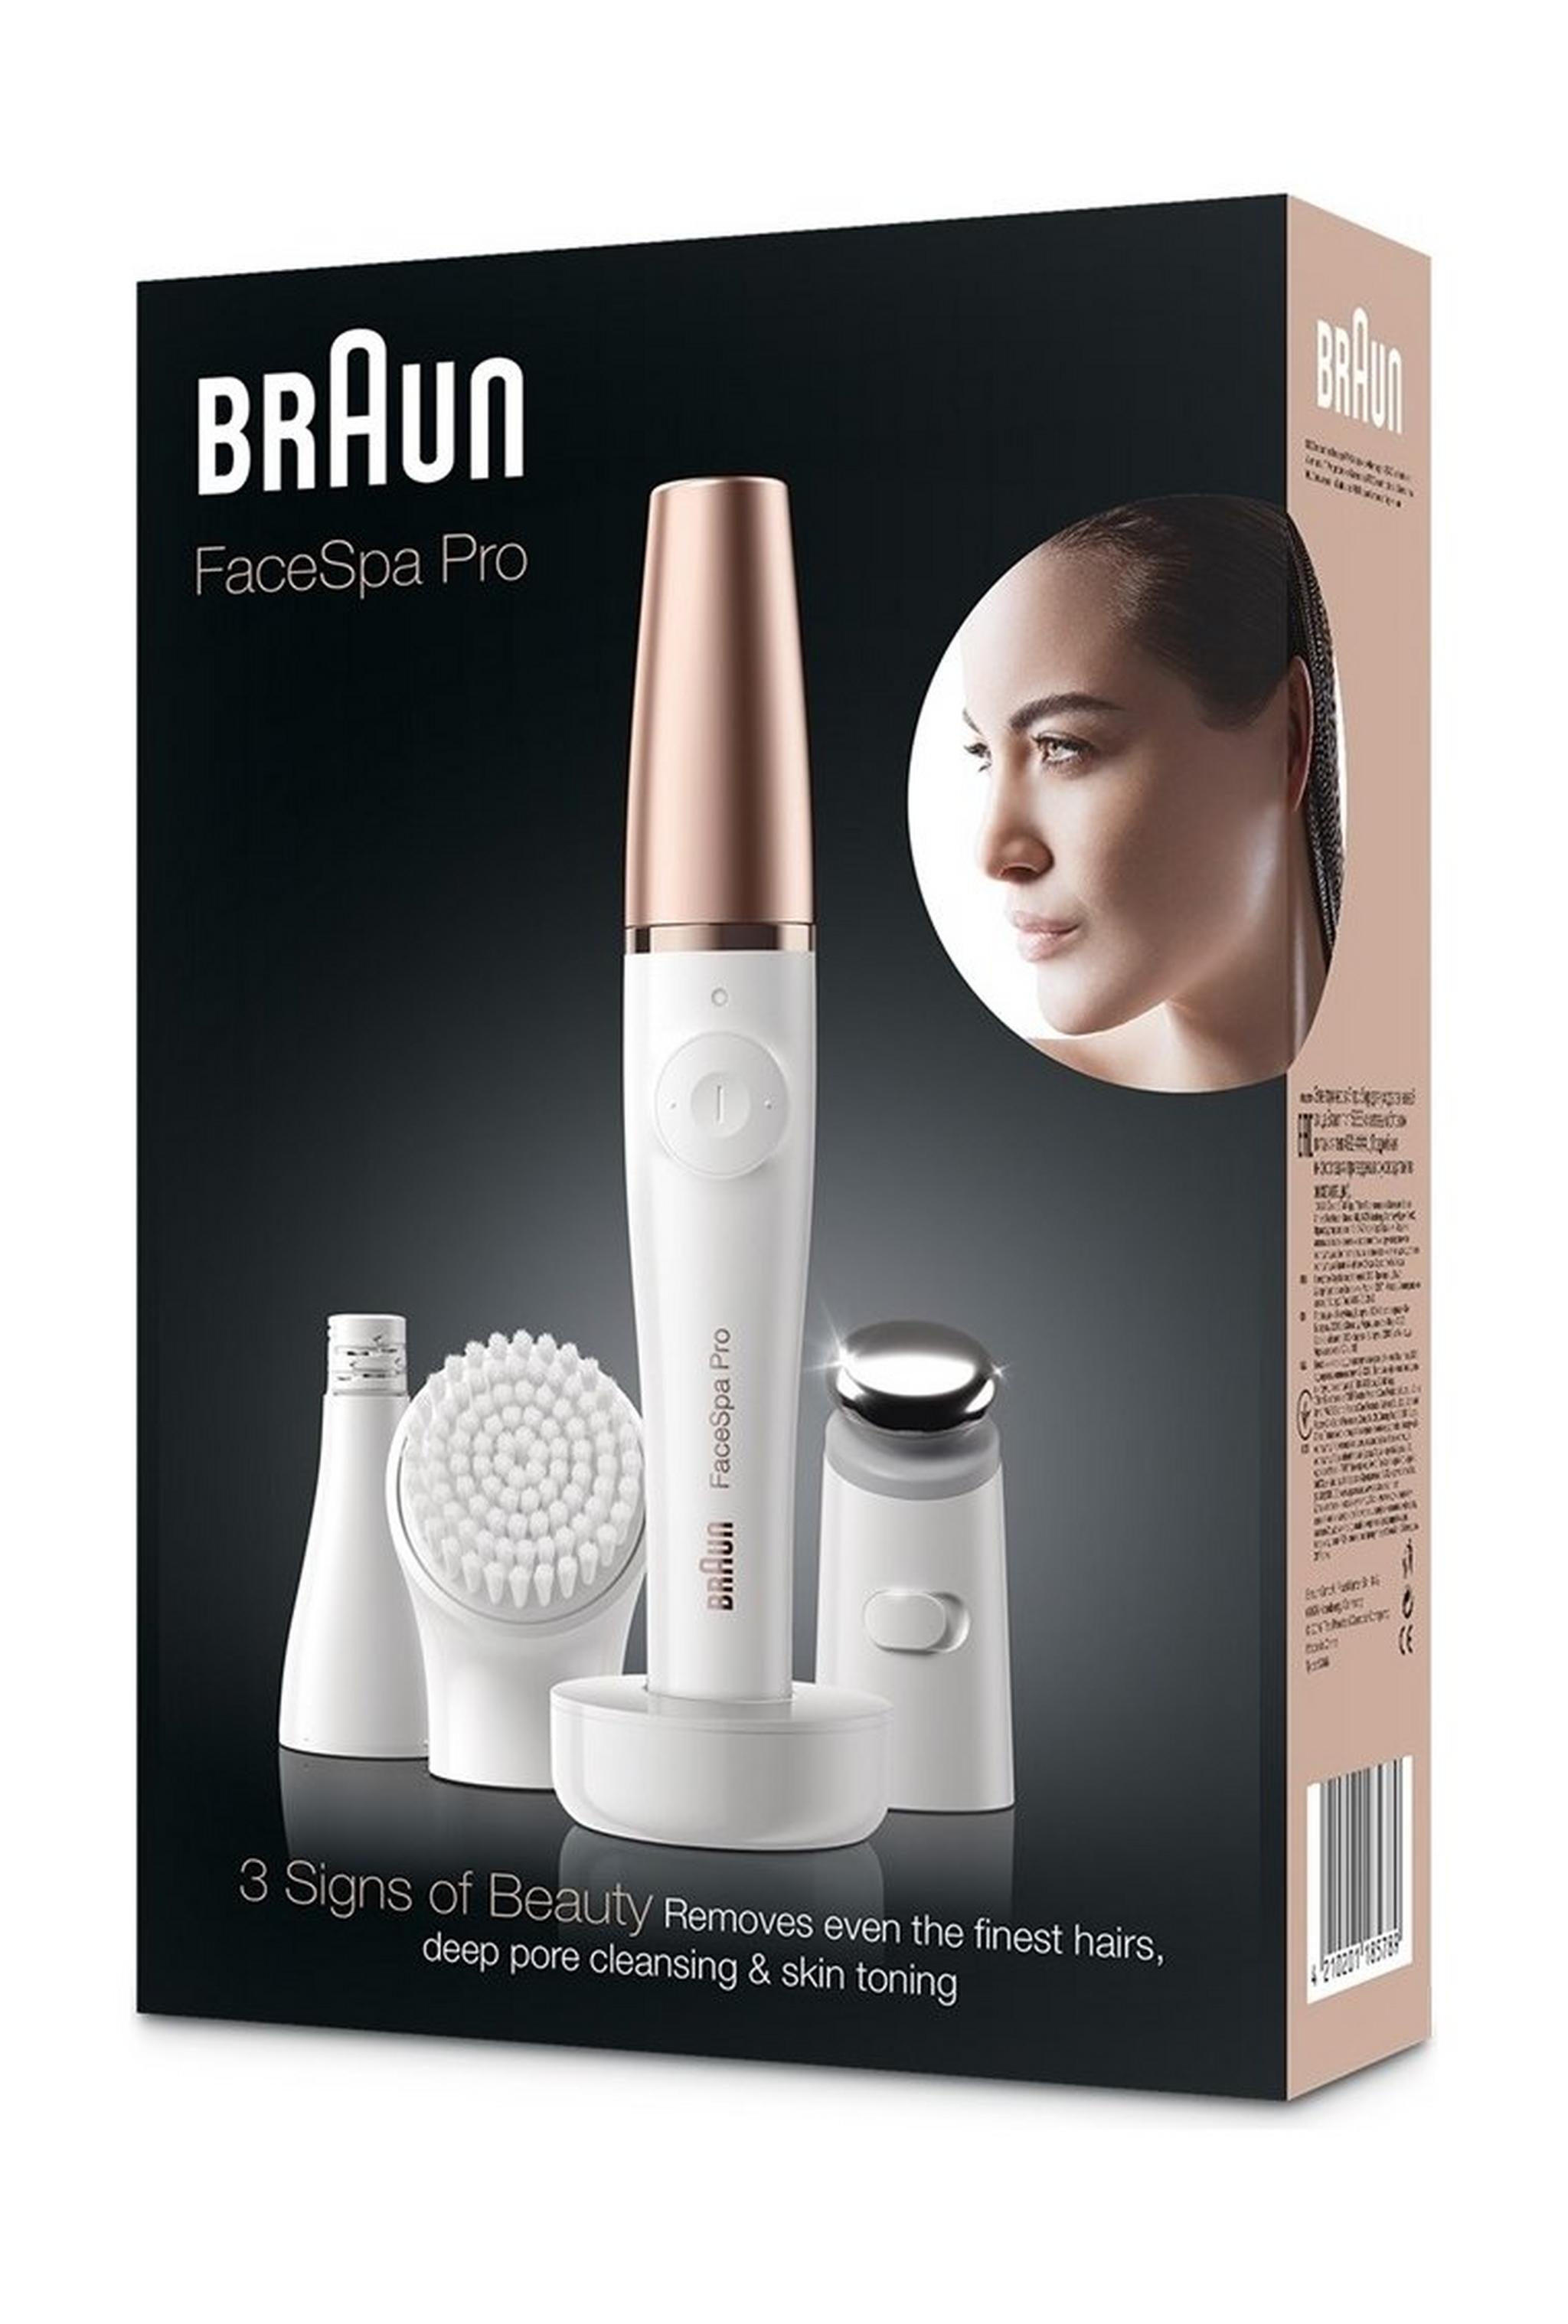 Braun FaceSpa Pro 911 Epilator 3-in-1 Facial Epilating Vitalizing & Skin Toning System